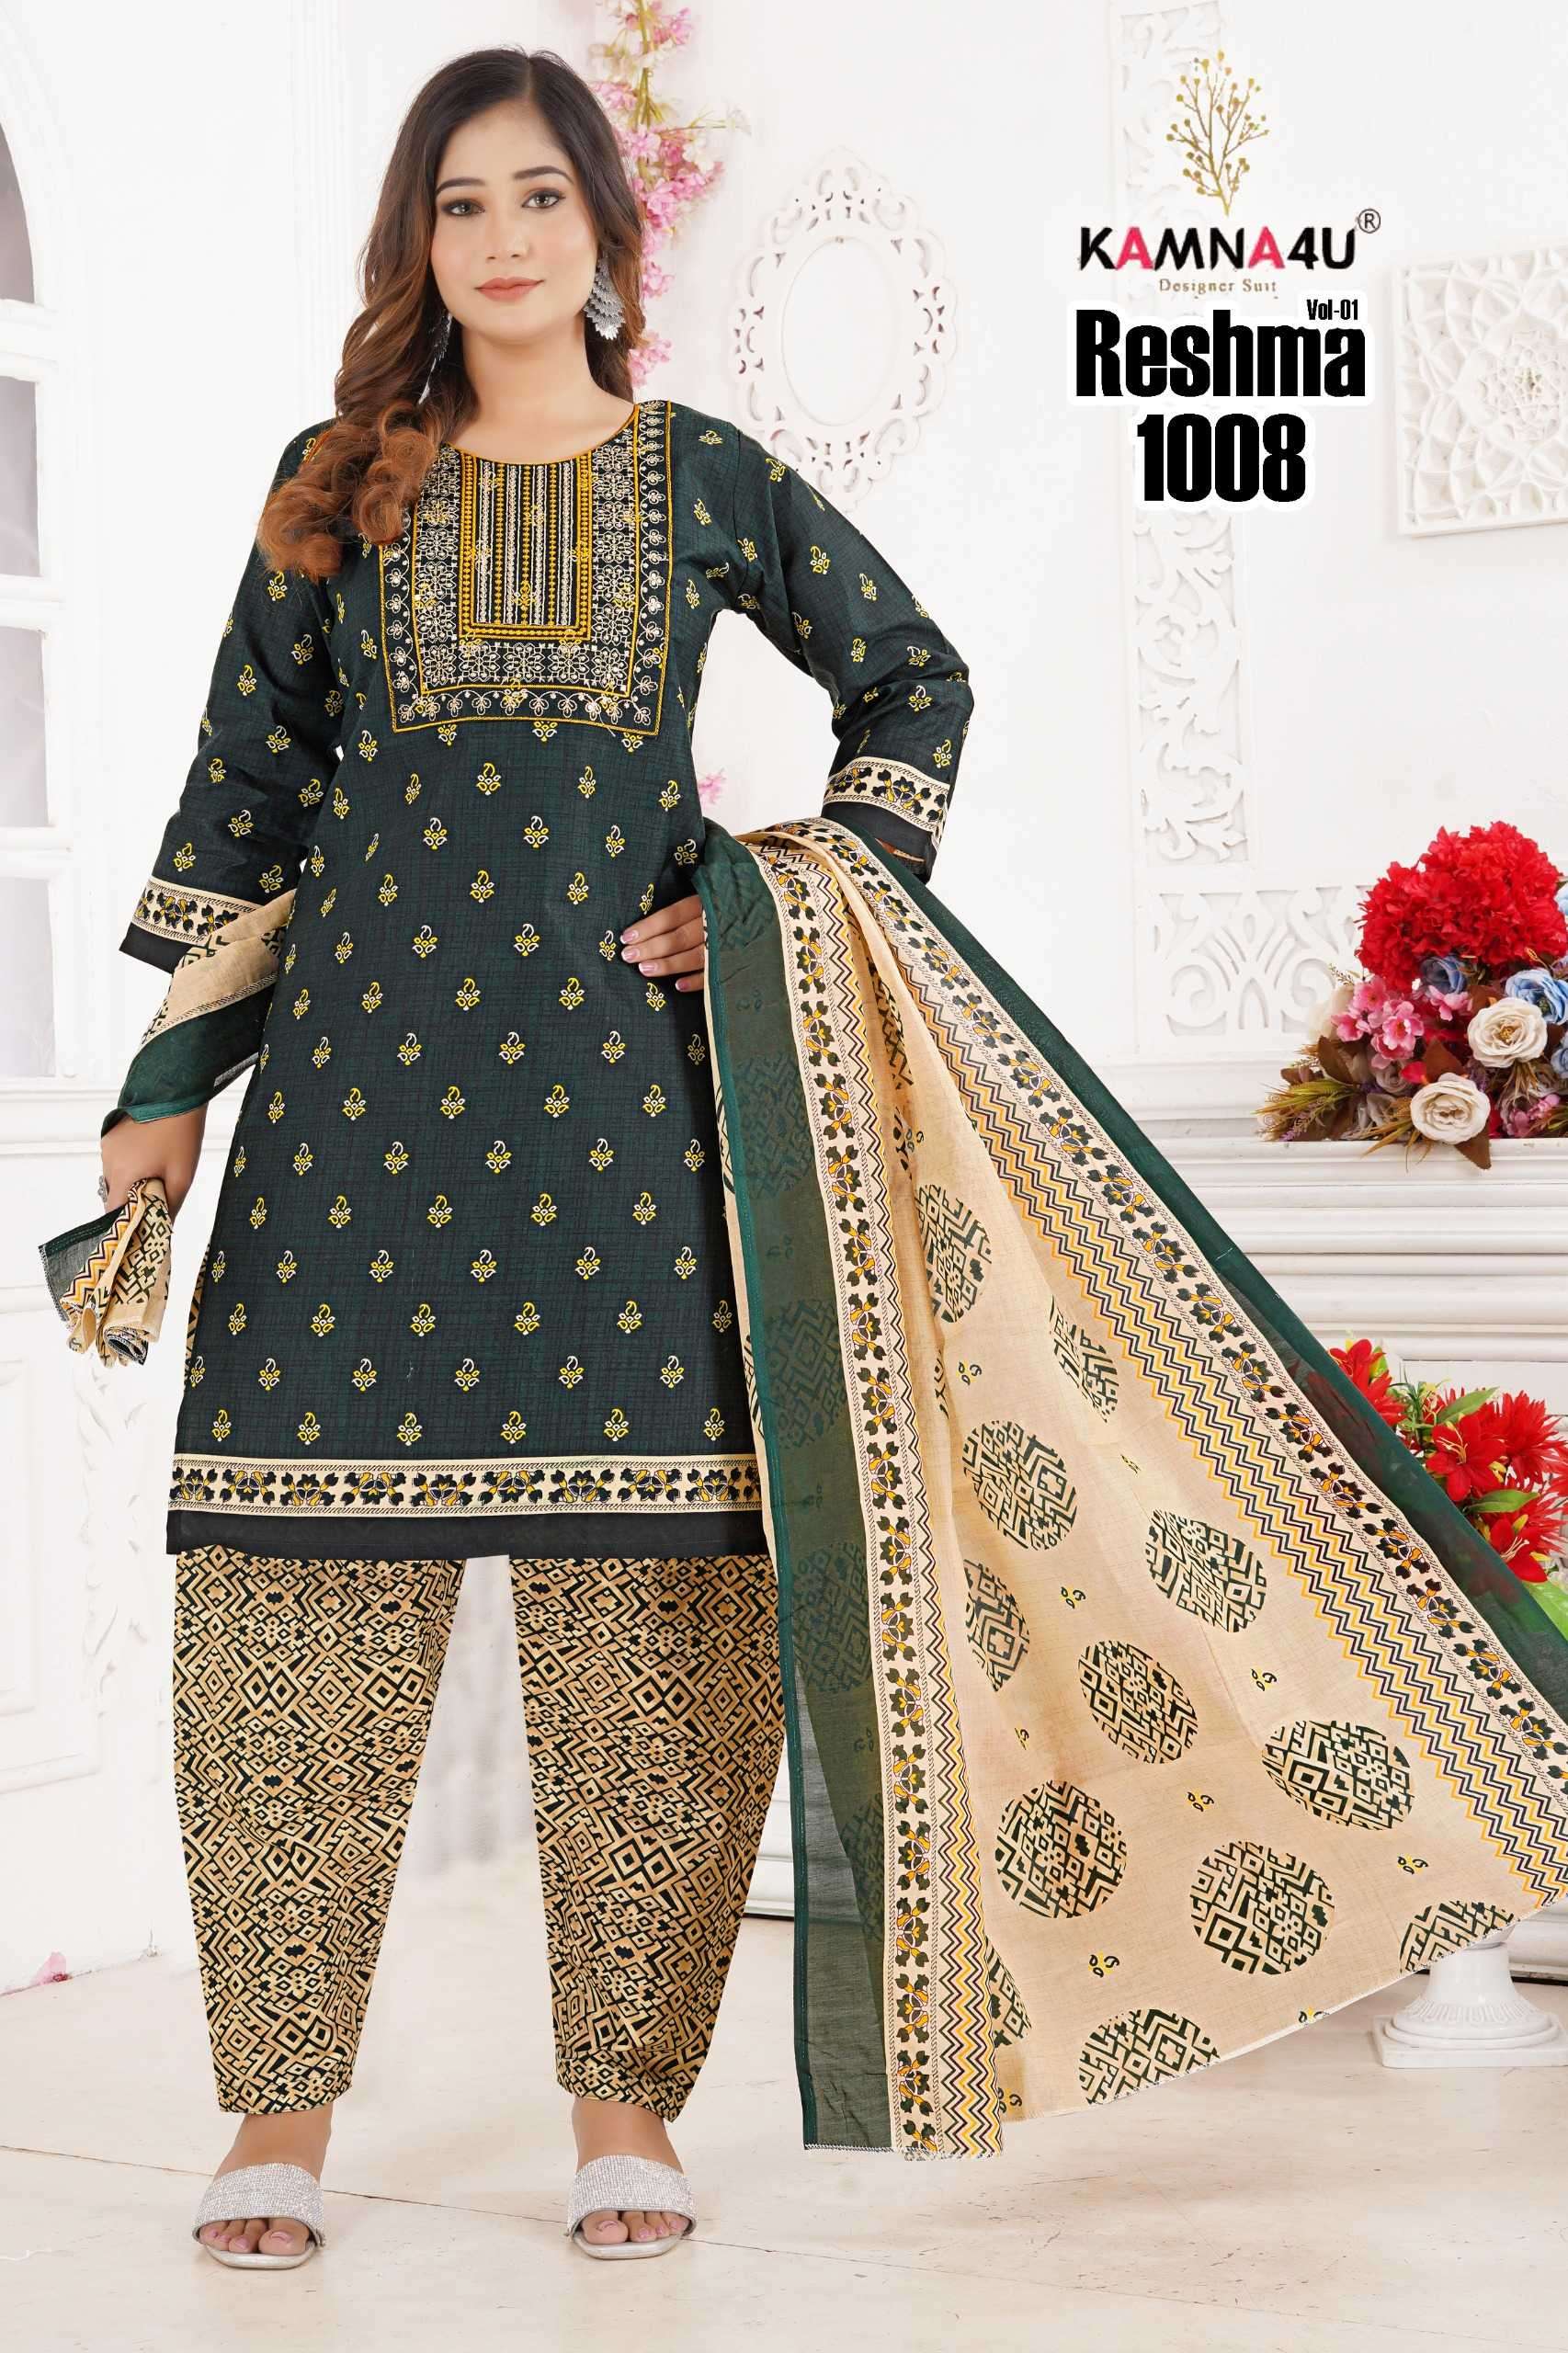 kamna4u reshma vol 1 series 1001-1036 cotton readymade suit 